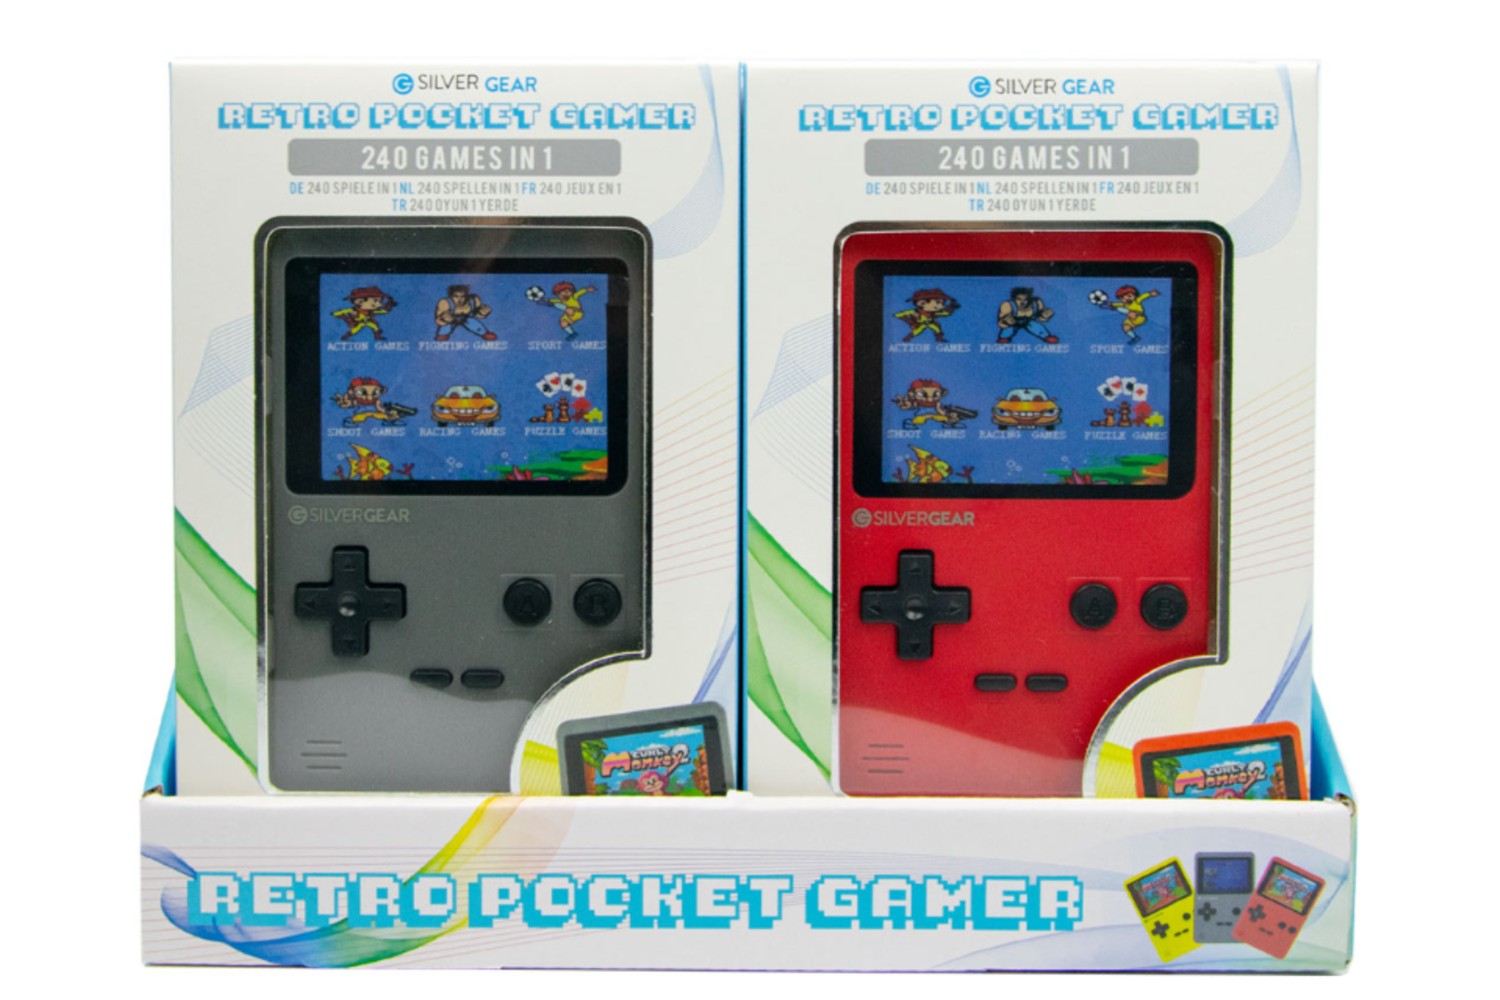 Retro pocket gamer display